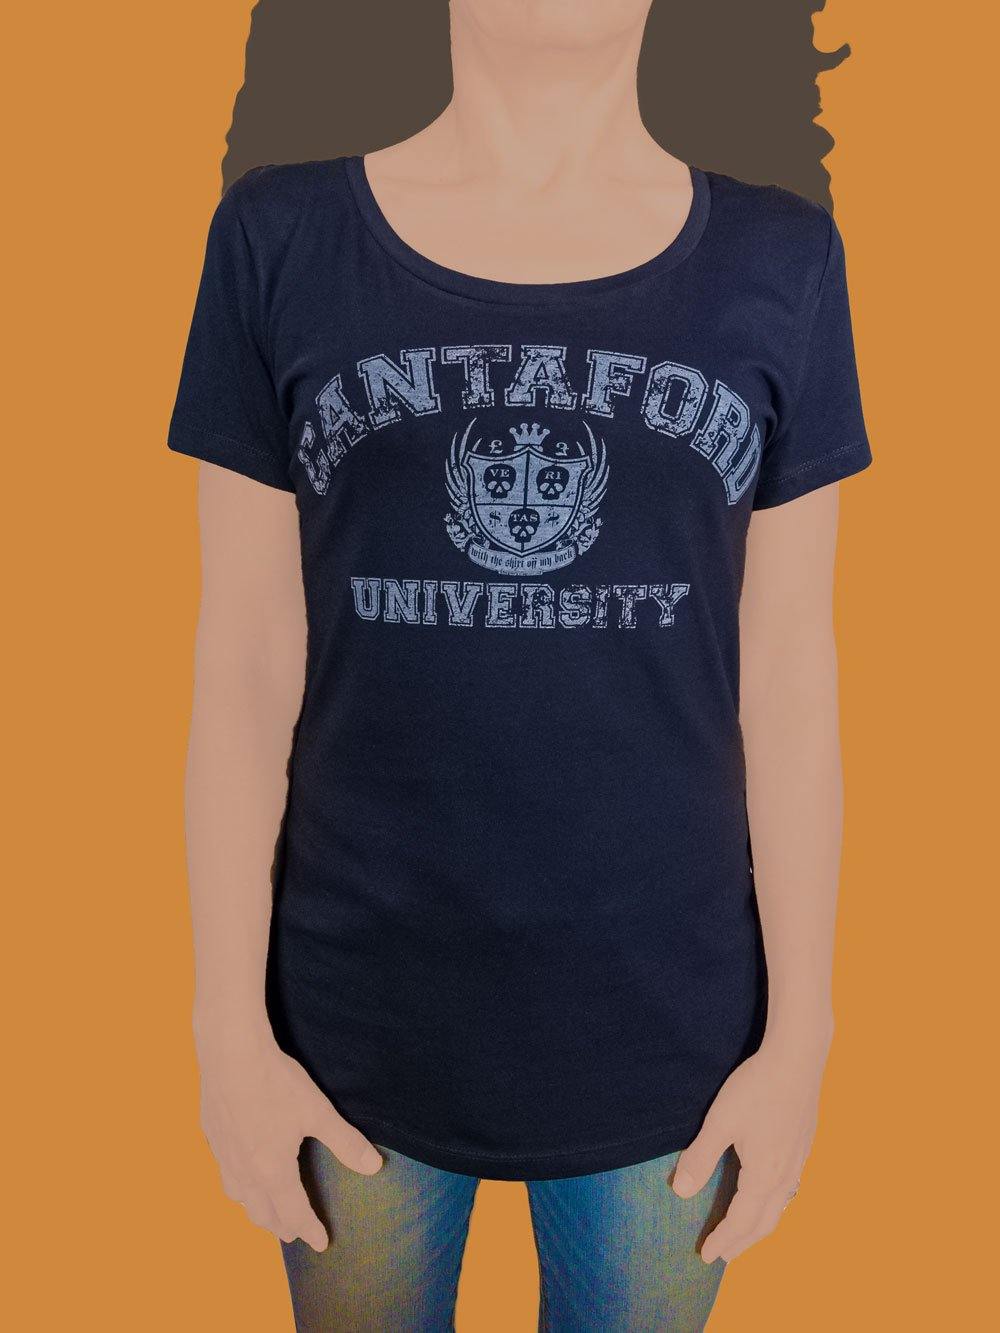 Cantaford University t-shirt hand printed 100% organic cotton t-shirt